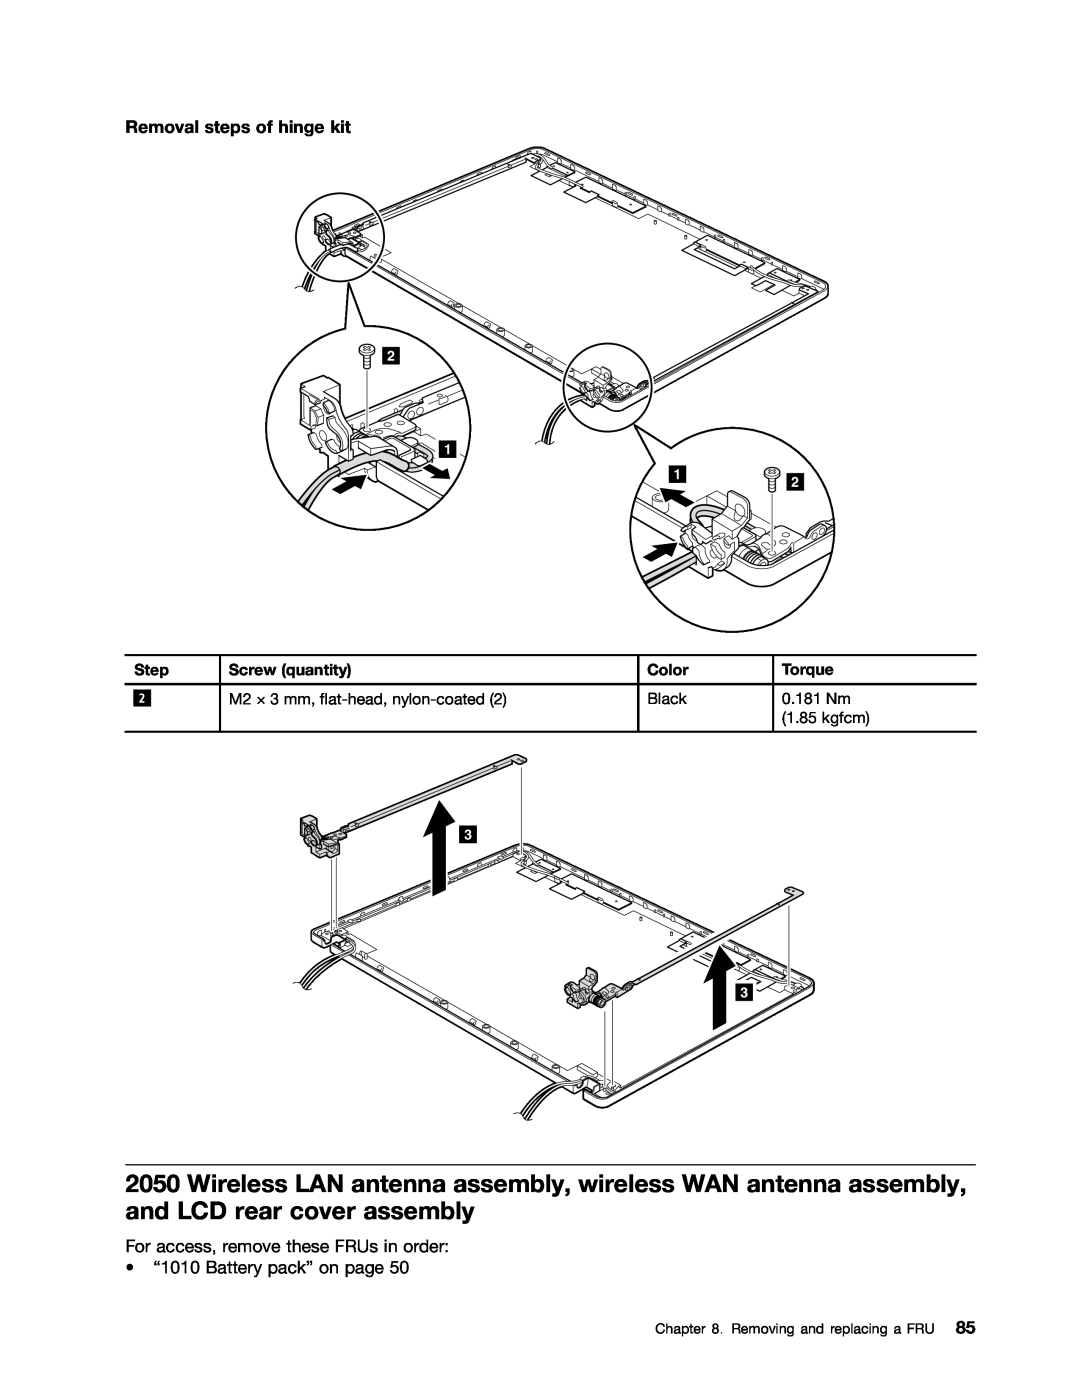 Lenovo E30, E31, EDGE 13 manual Removal steps of hinge kit 